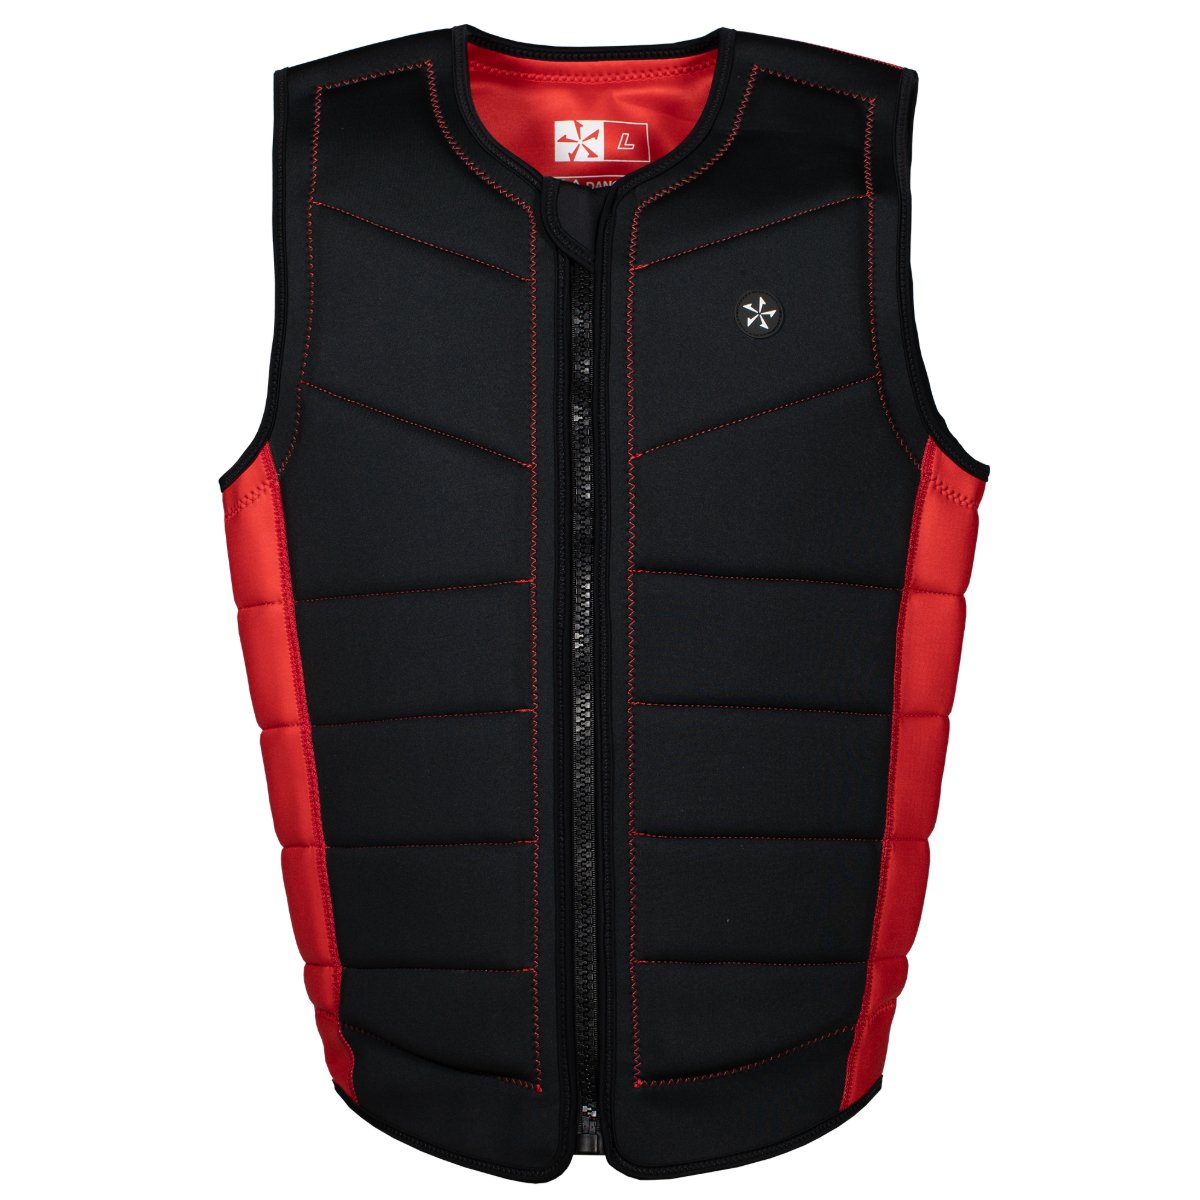 Phase 5 Men's Pro Comp Vest in Red - BoardCo